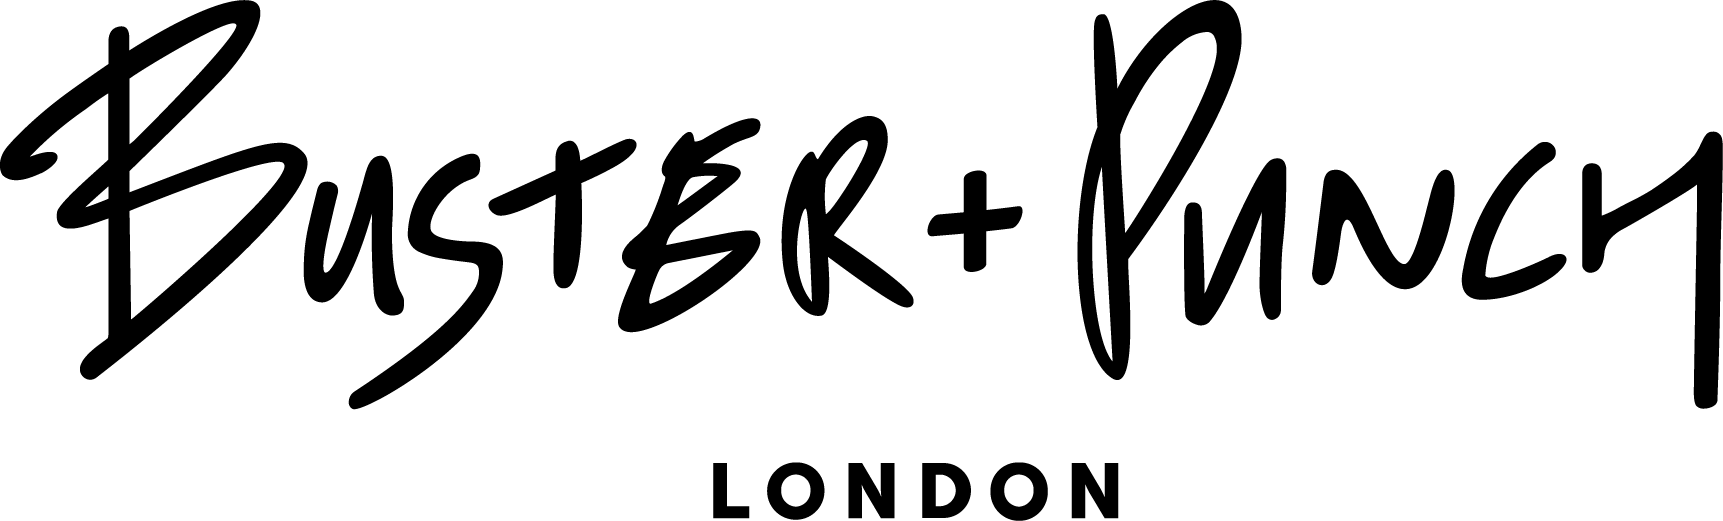 Buster + Punch London Logo